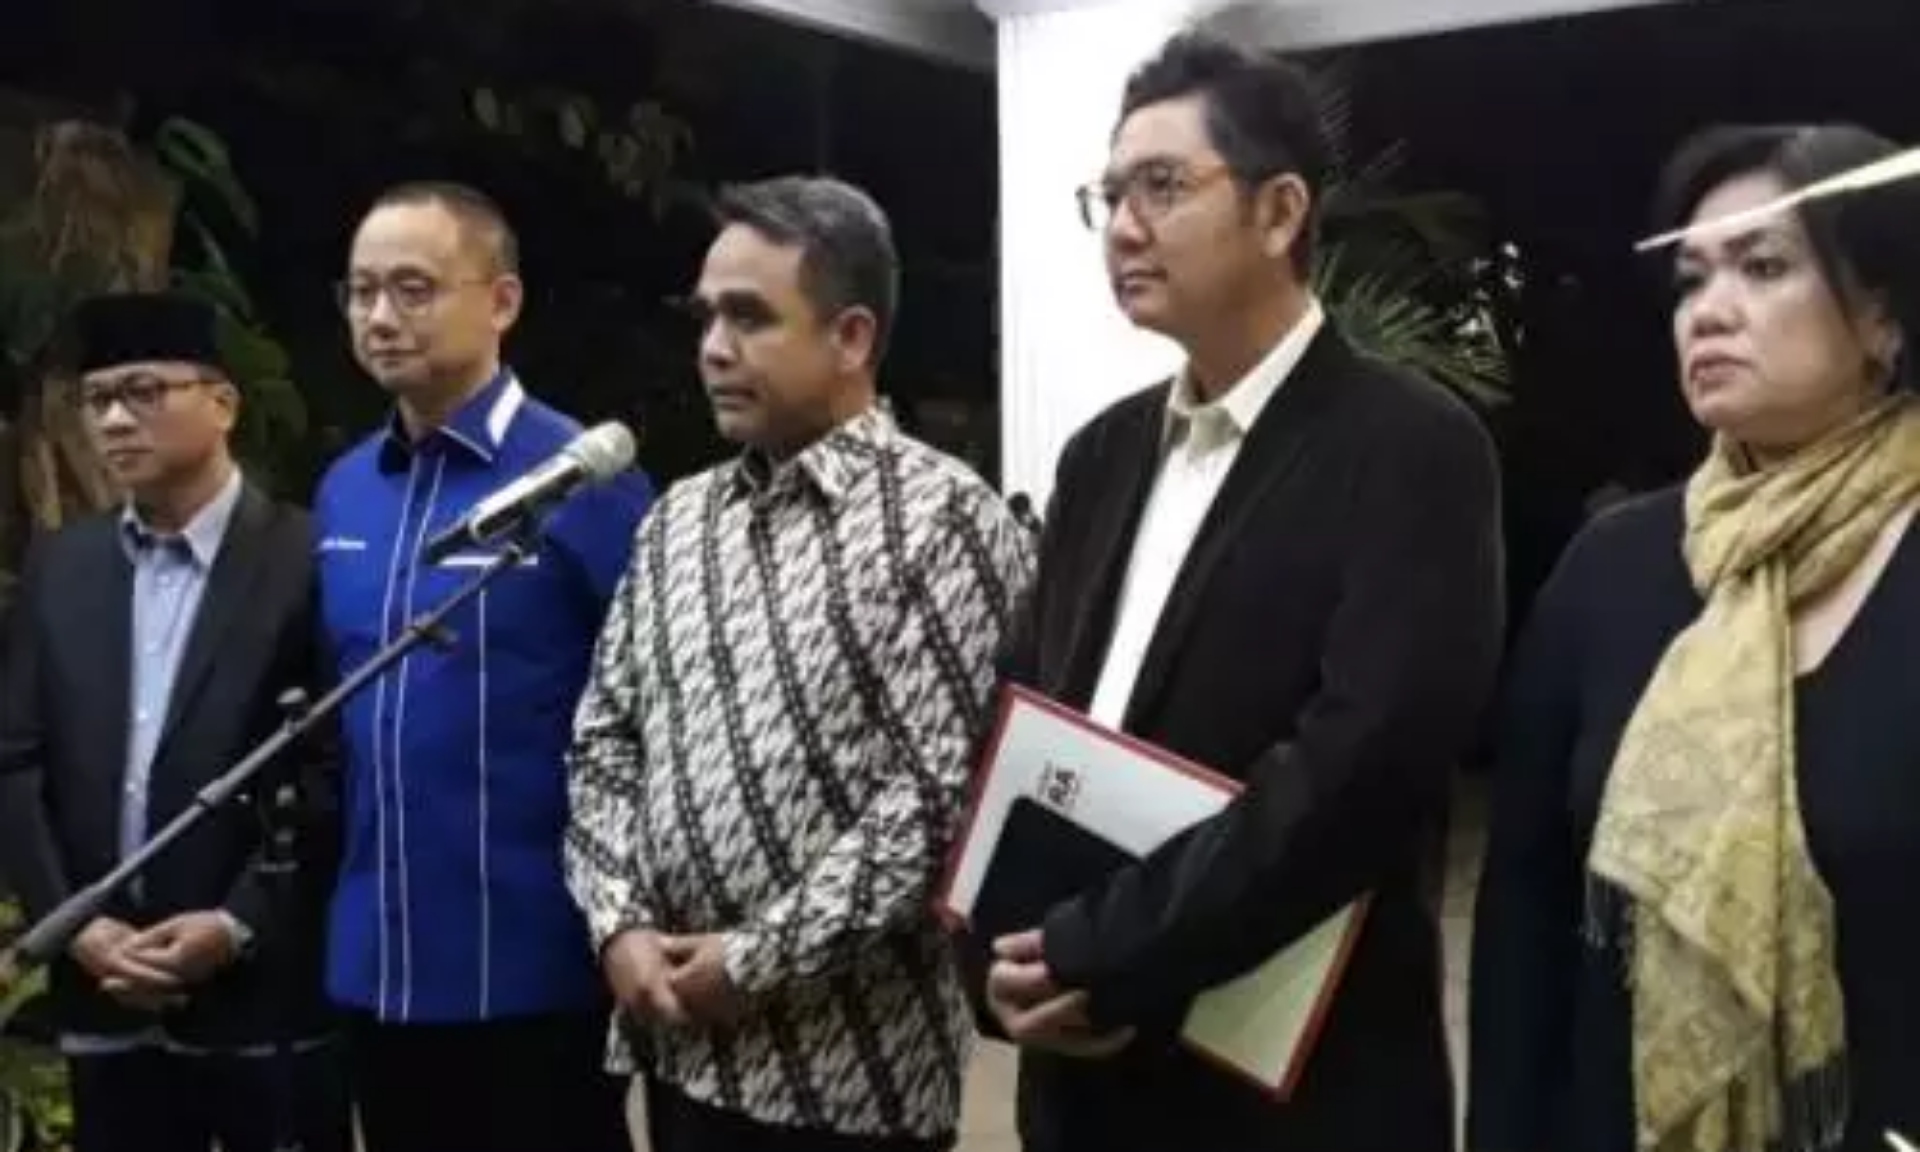 Prabowo-Sandi Pilih Nama Koalisi Indonesia Adil Makmur, Ini Alasannya